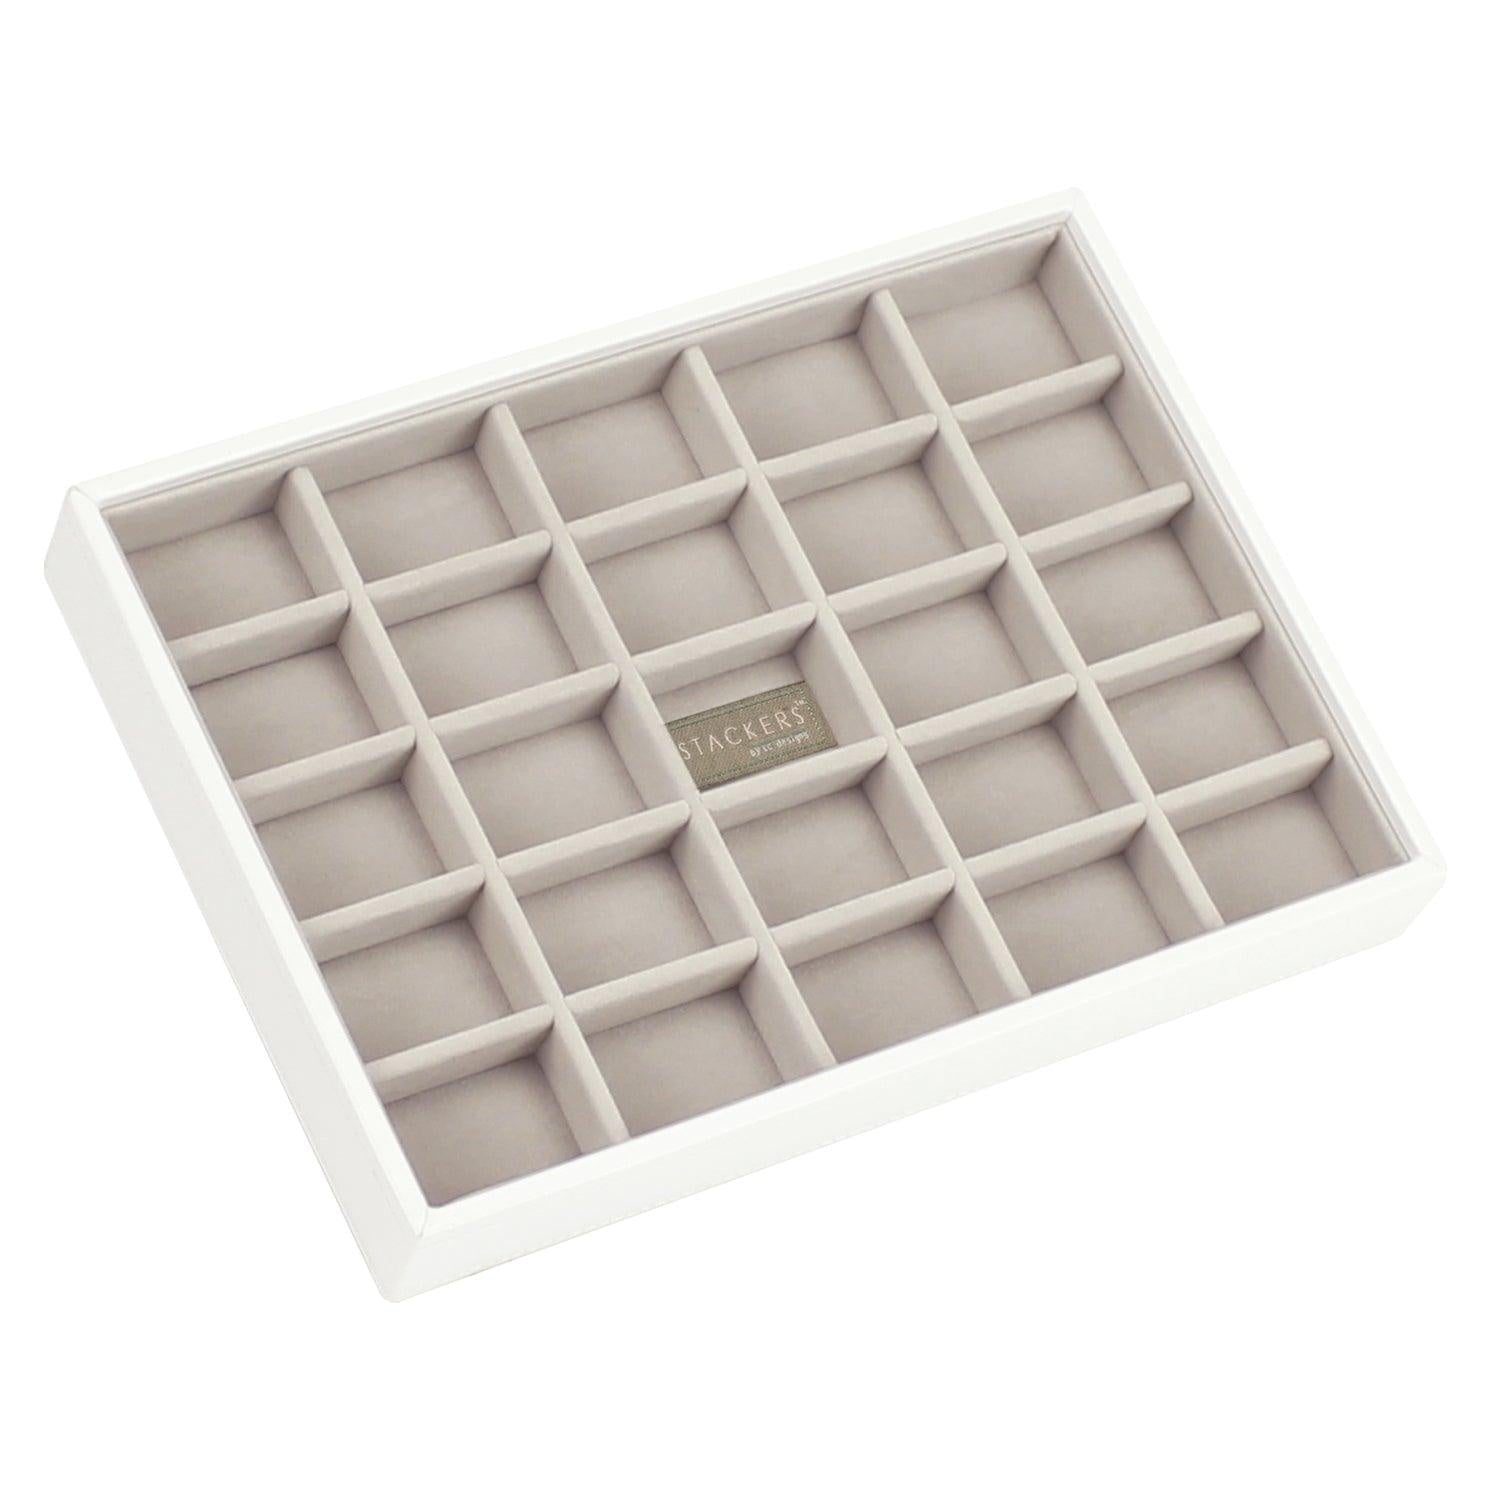 White PREMIUM Stackers Jewellery Box small compartment tray